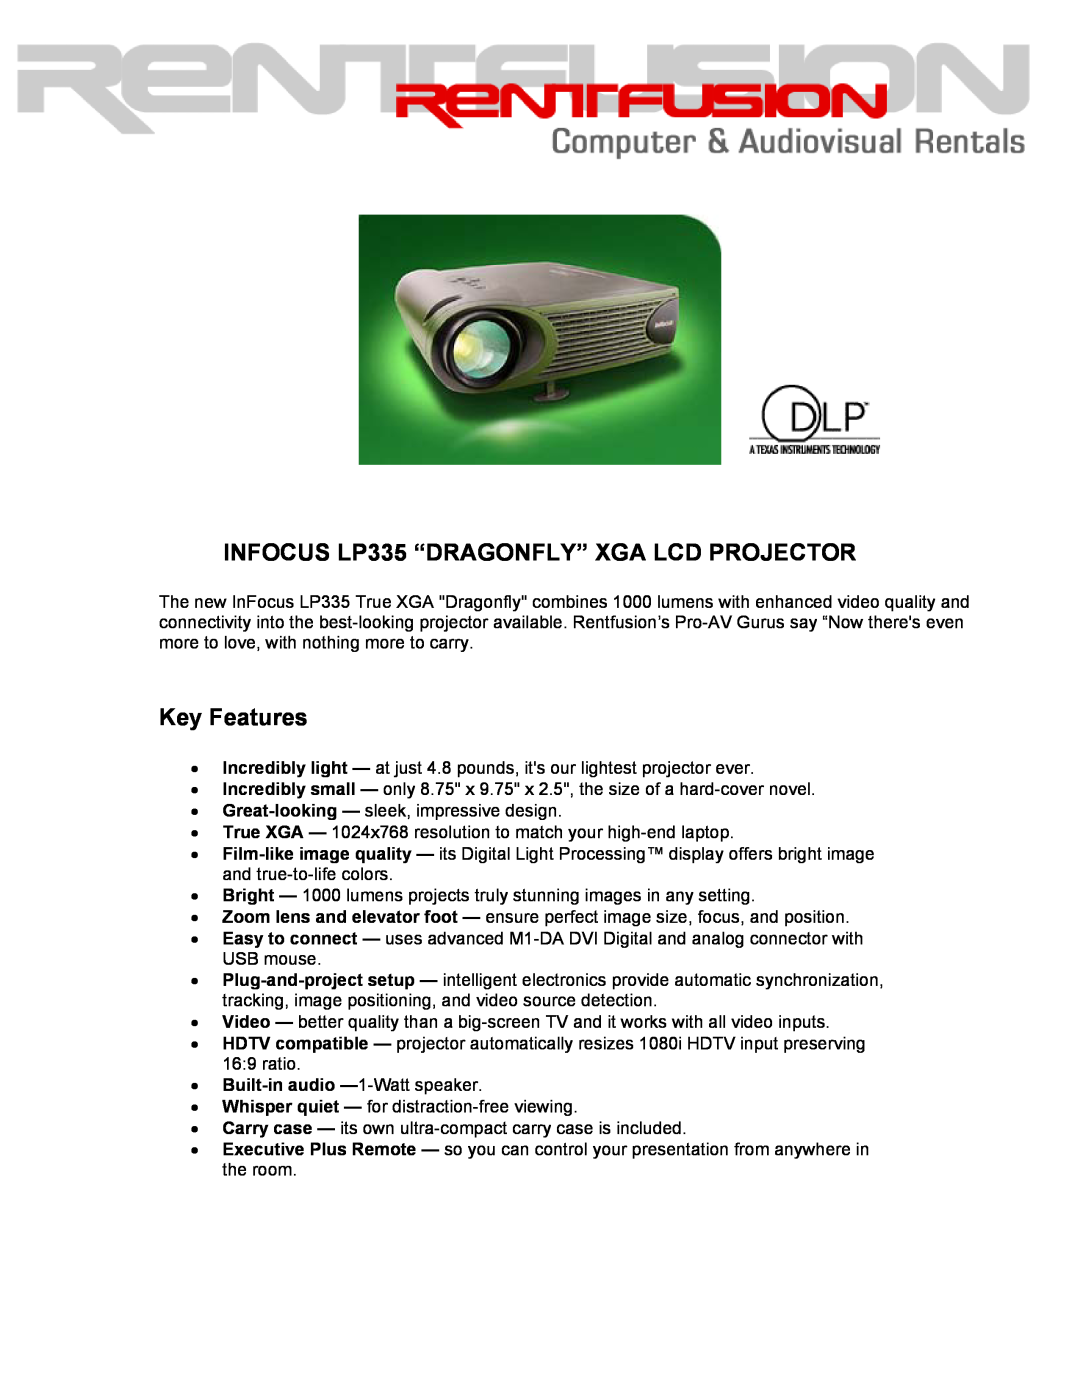 InFocus manual INFOCUS LP335 “DRAGONFLY” XGA LCD PROJECTOR, Key Features, Built-in audio -1-Watt speaker 